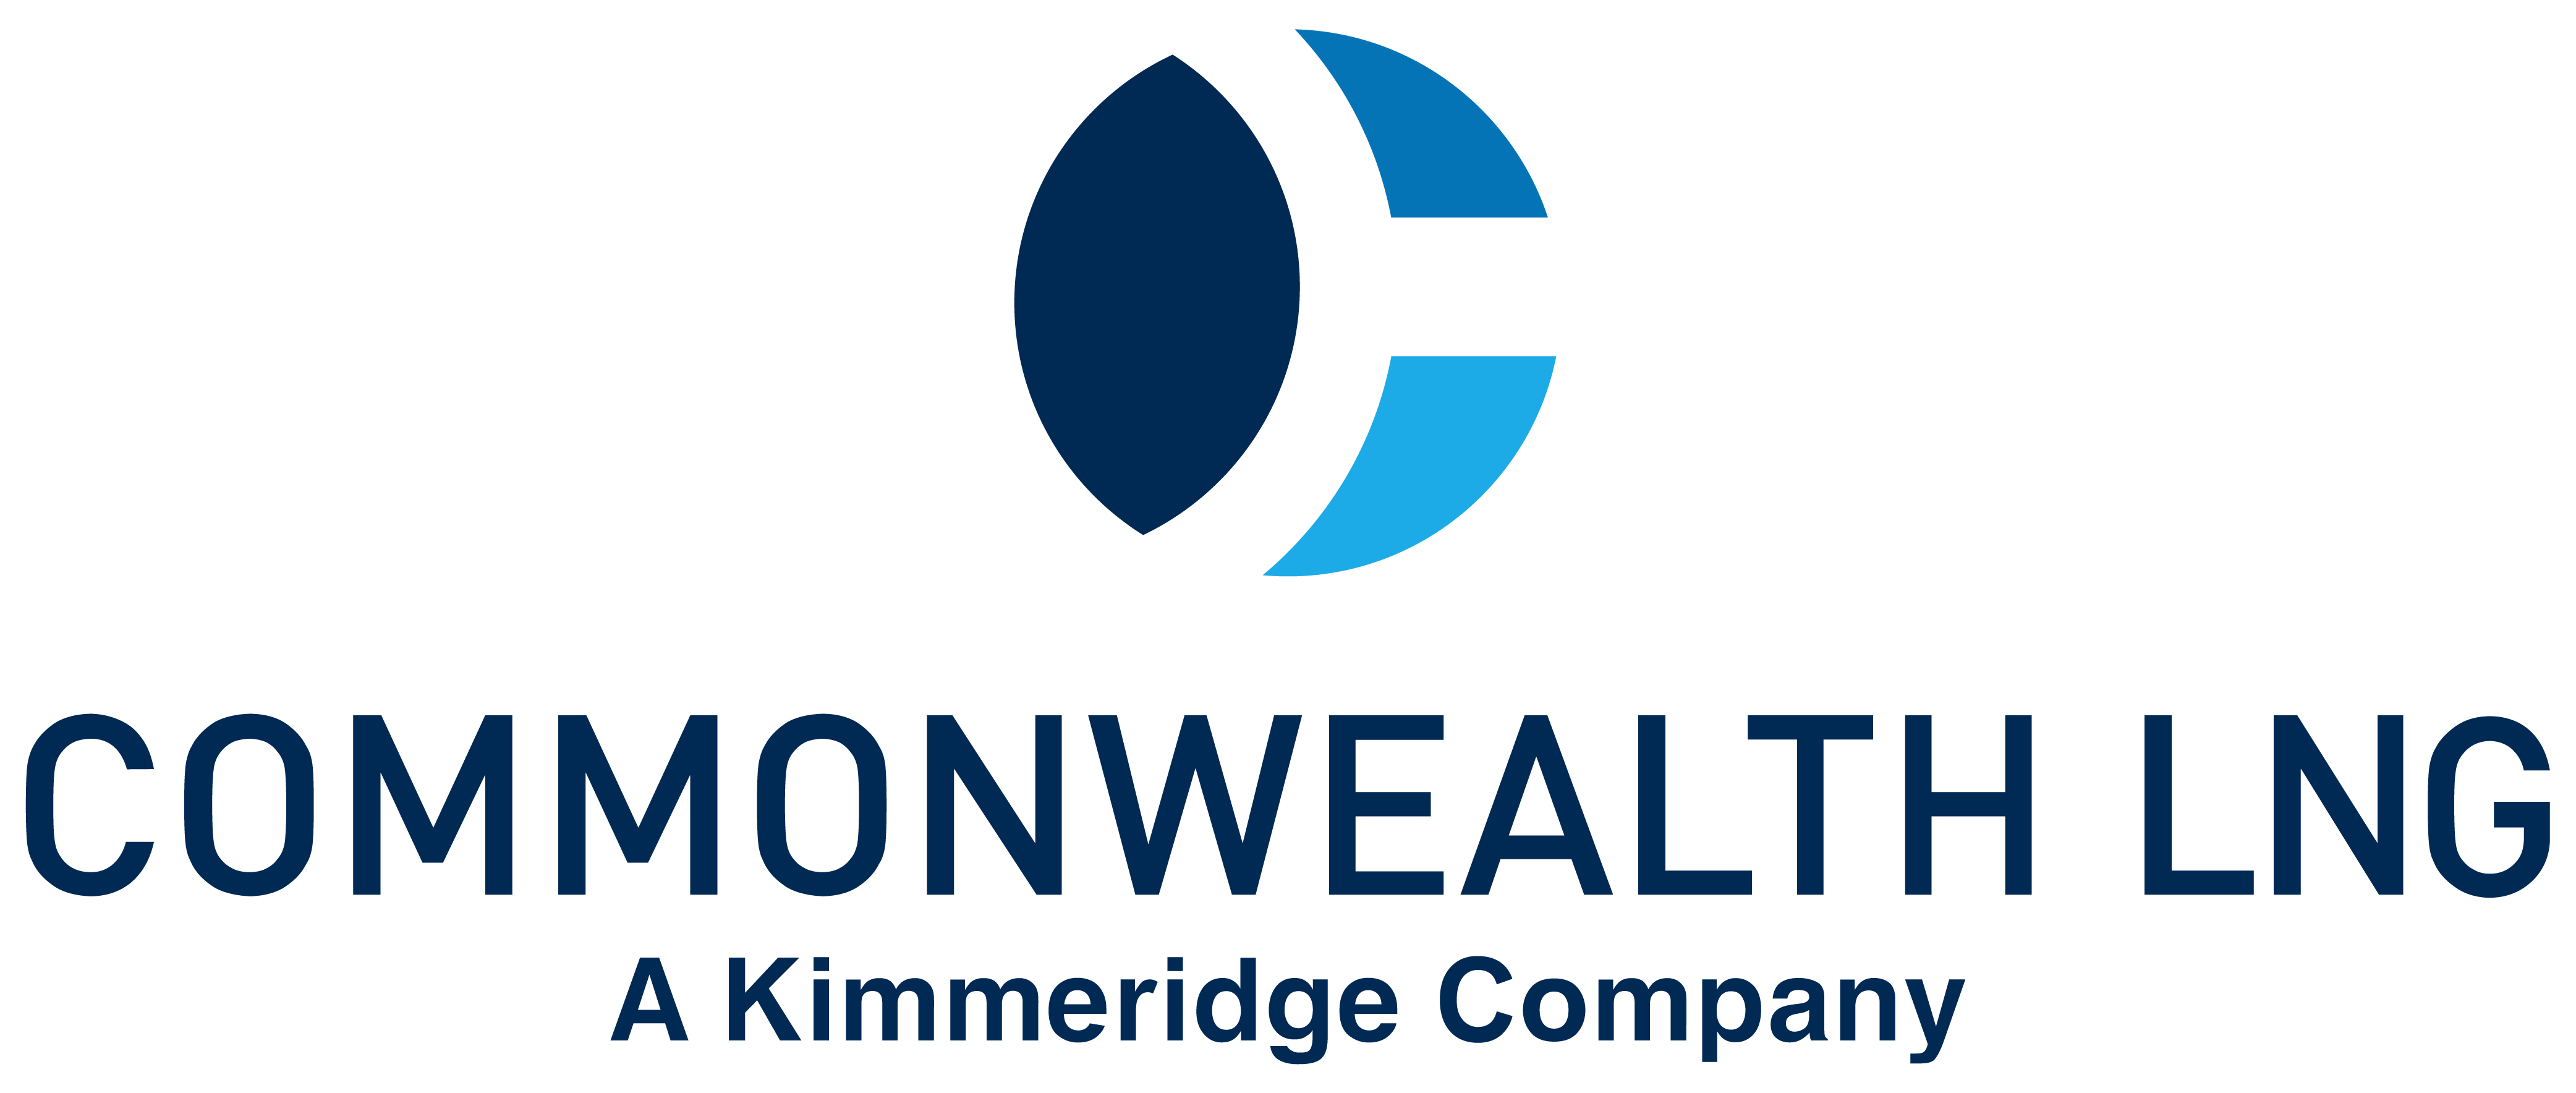 Commonwealthlng Logo FINAL RGB (1)